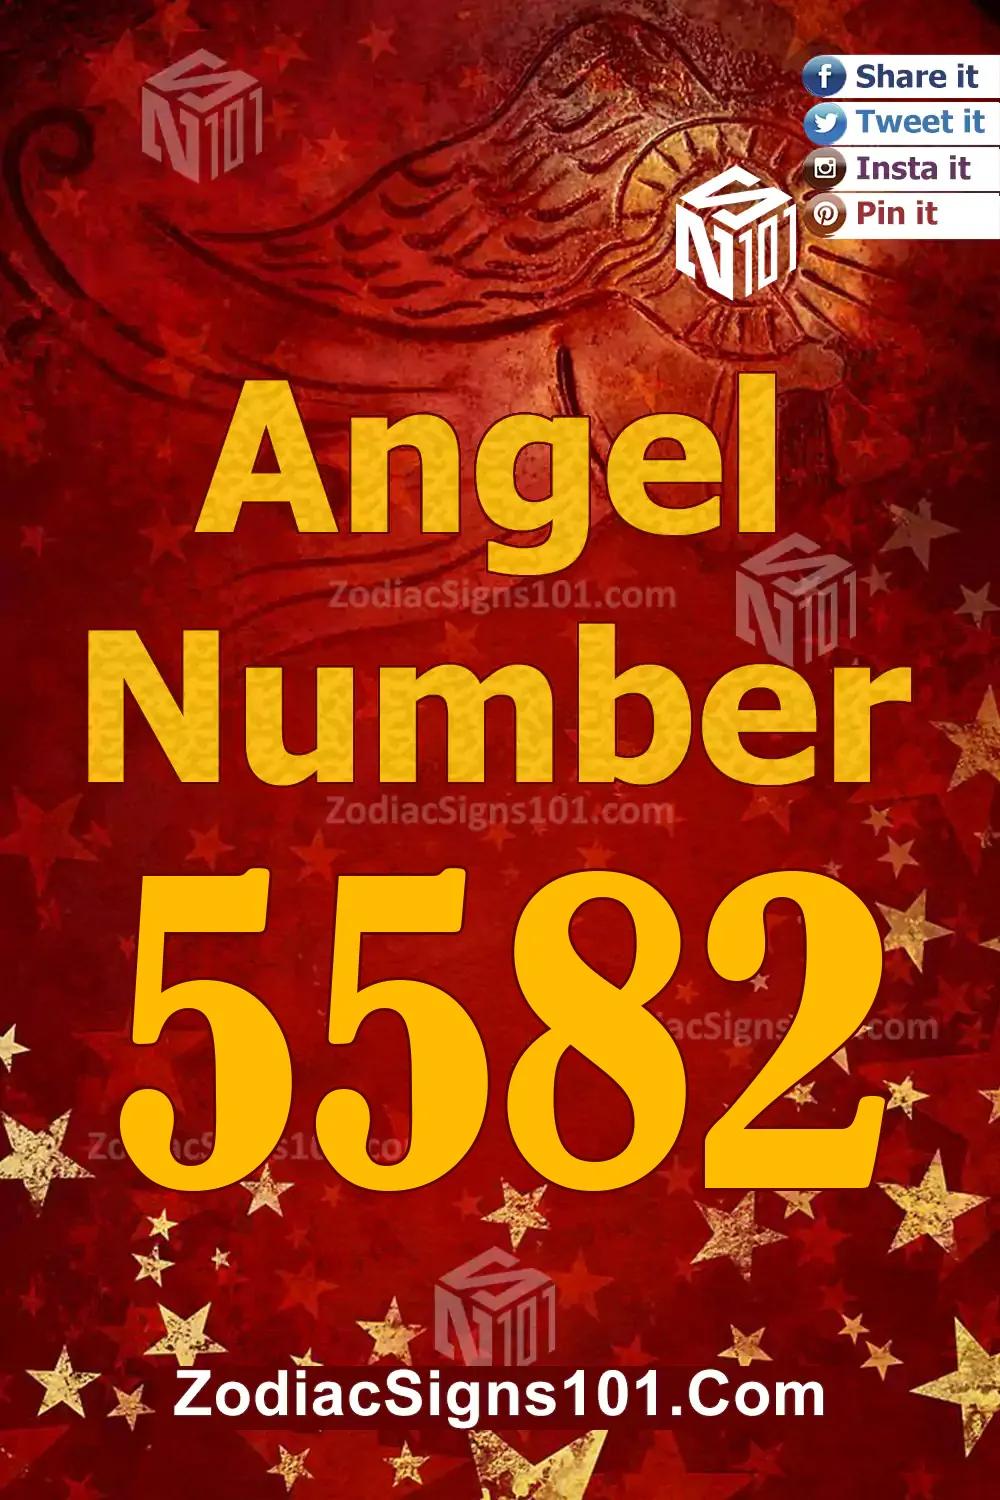 5582-Angel-Number-Meaning.jpg